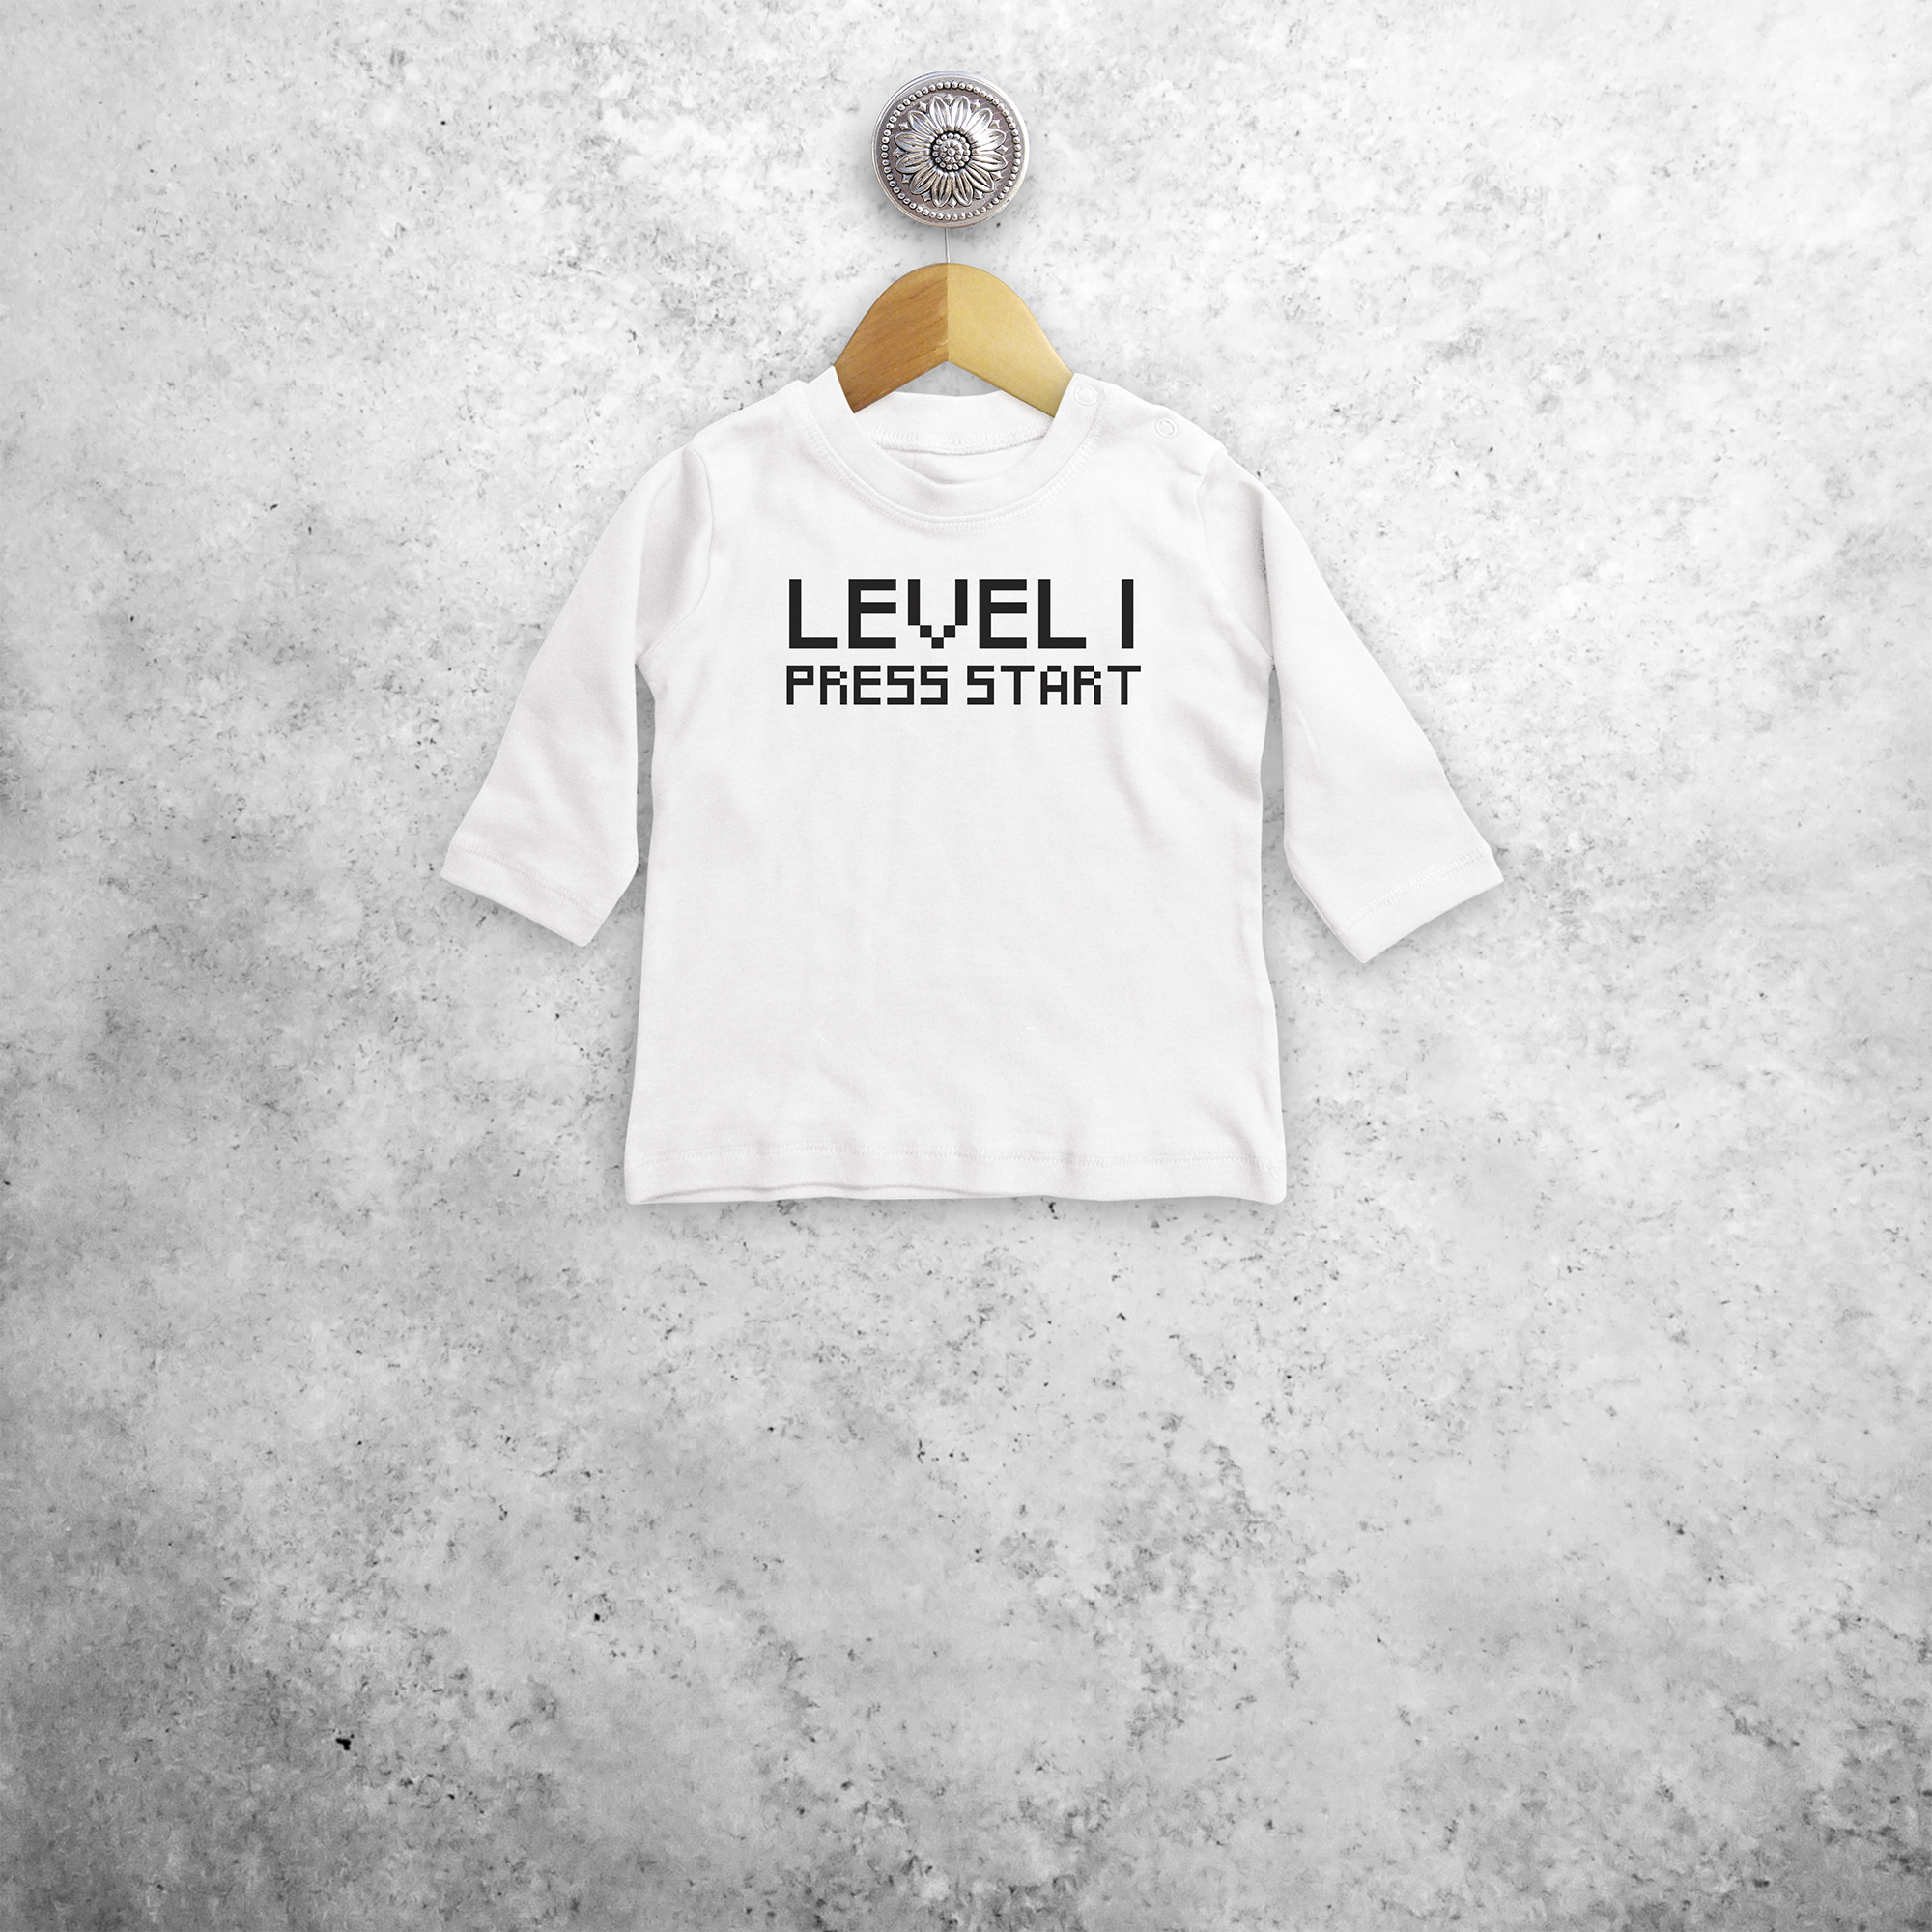 'Level... - Press start' baby longsleeve shirt